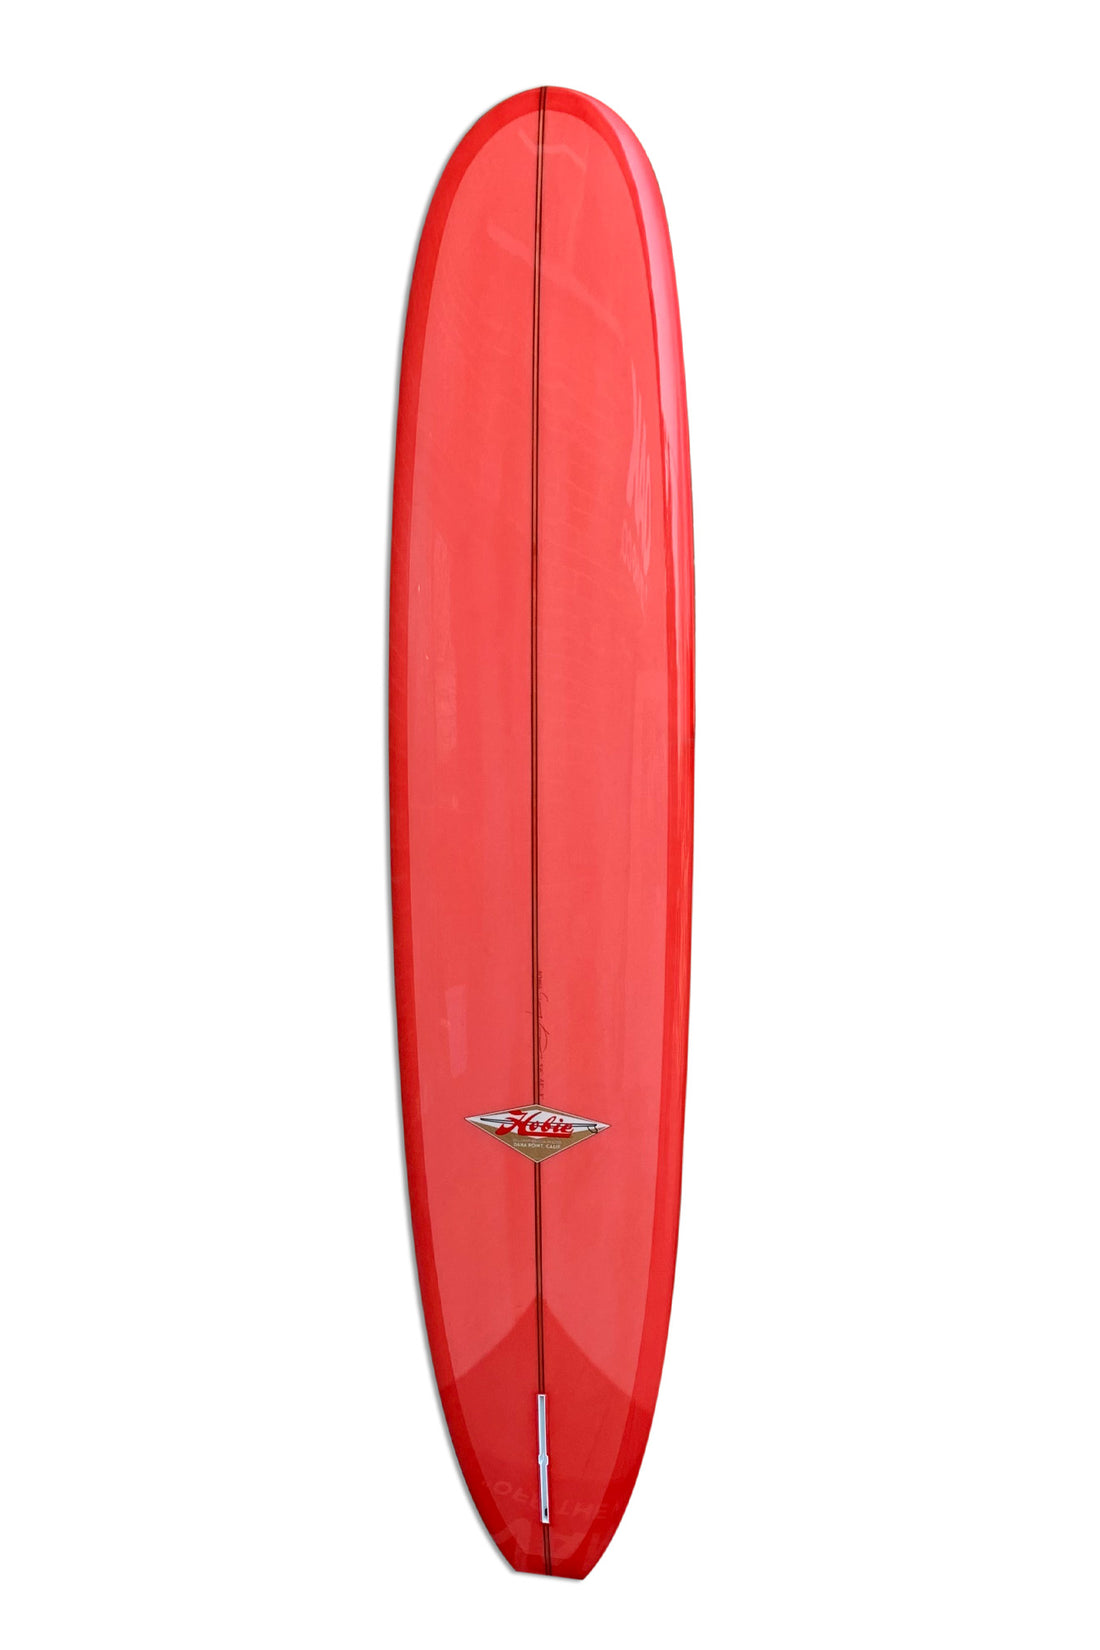 Slime Balls Speed Balls 99a 56mm Brains Orange Yellow Swirl Skateboard –  Quality Surfboards Hawaii